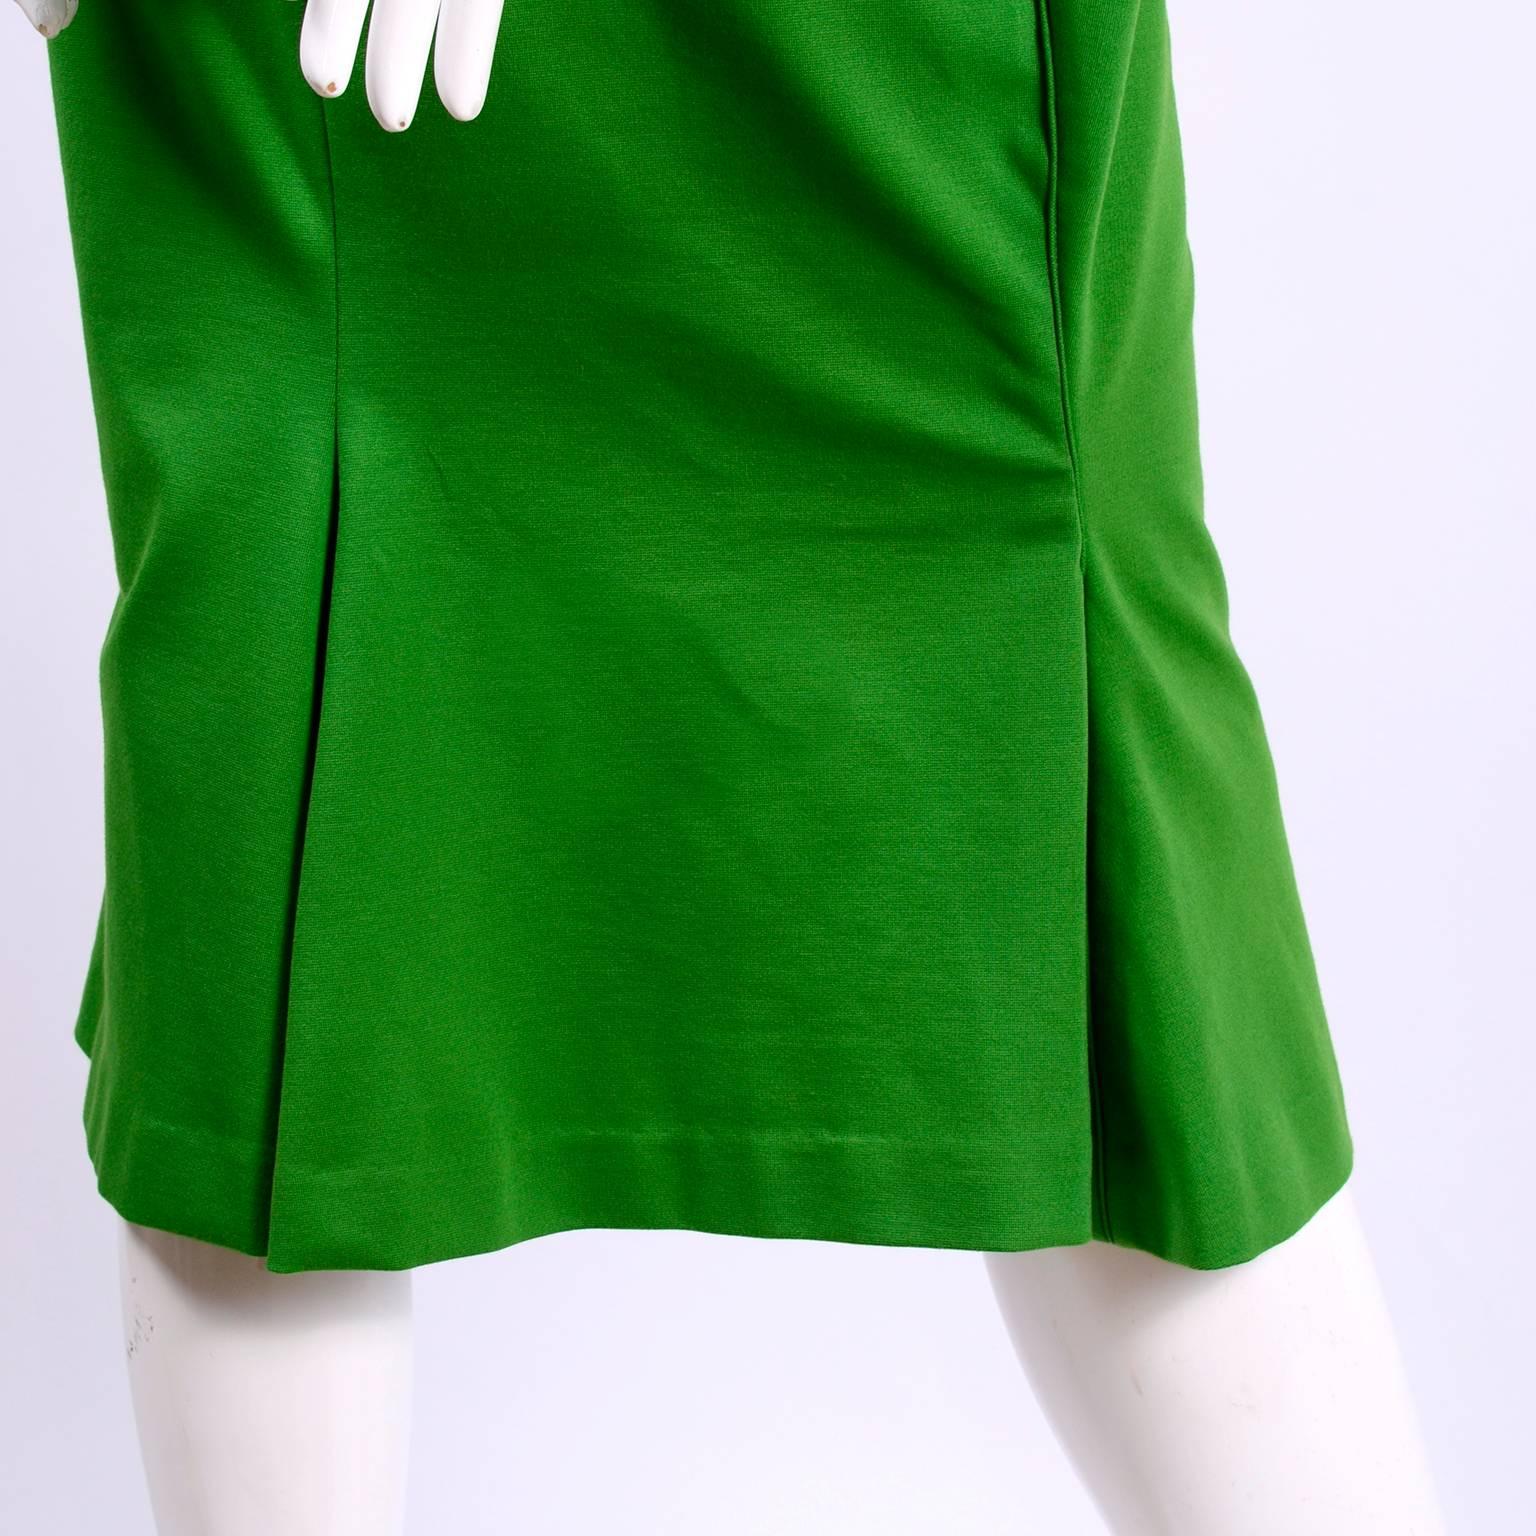 zac posen green dress